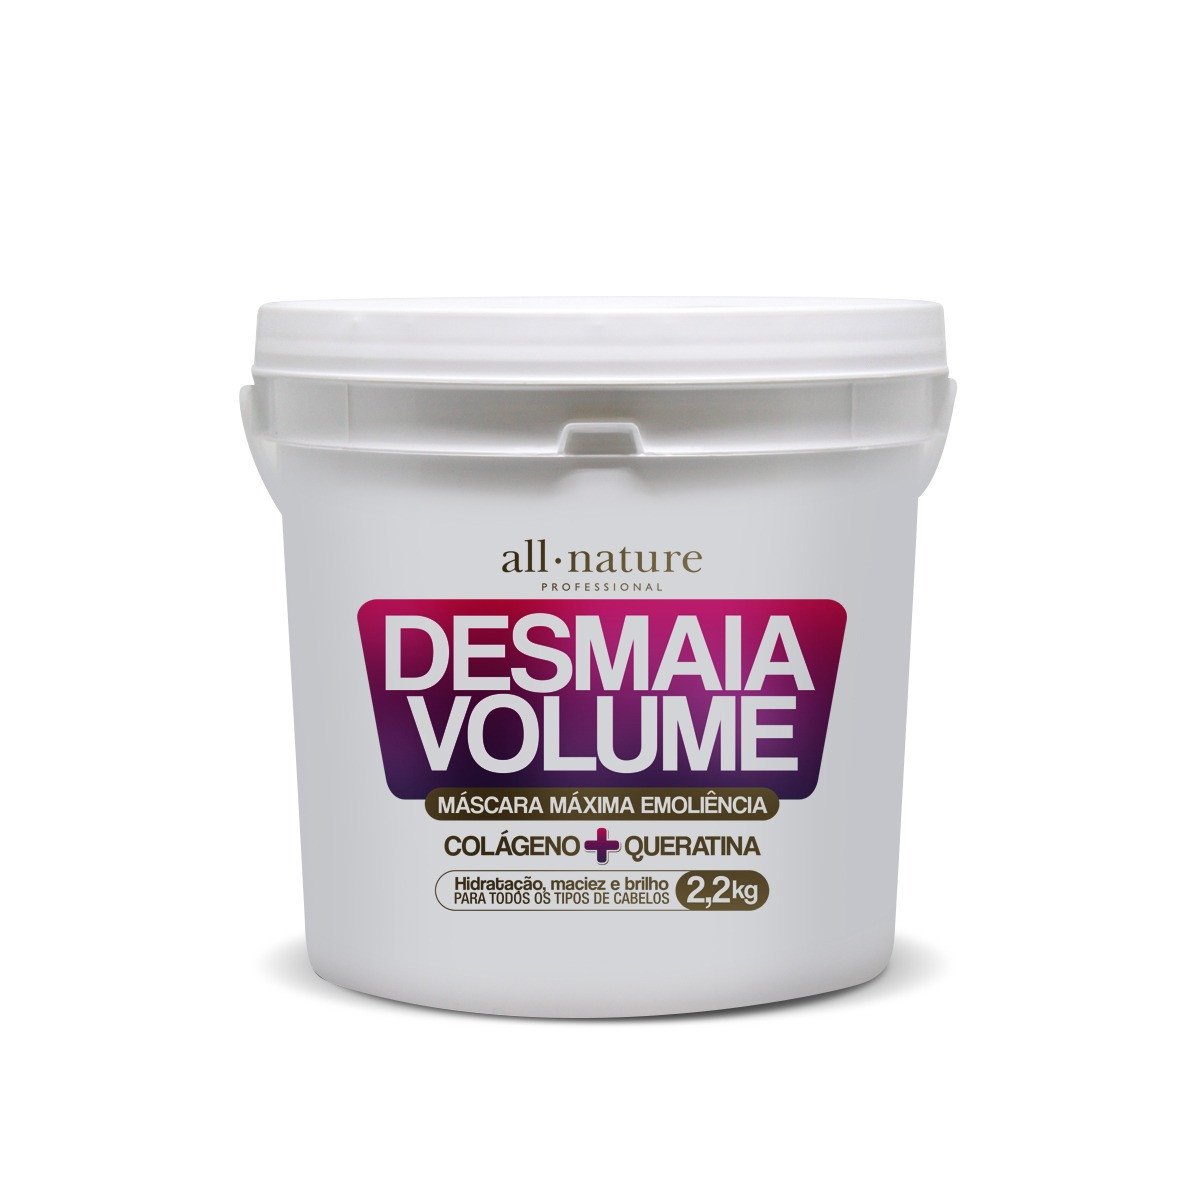 All Nature Hair Mask Desmaia Volume Keratin Collagen Maximum Emollience Mask 2,2Kg - All Nature